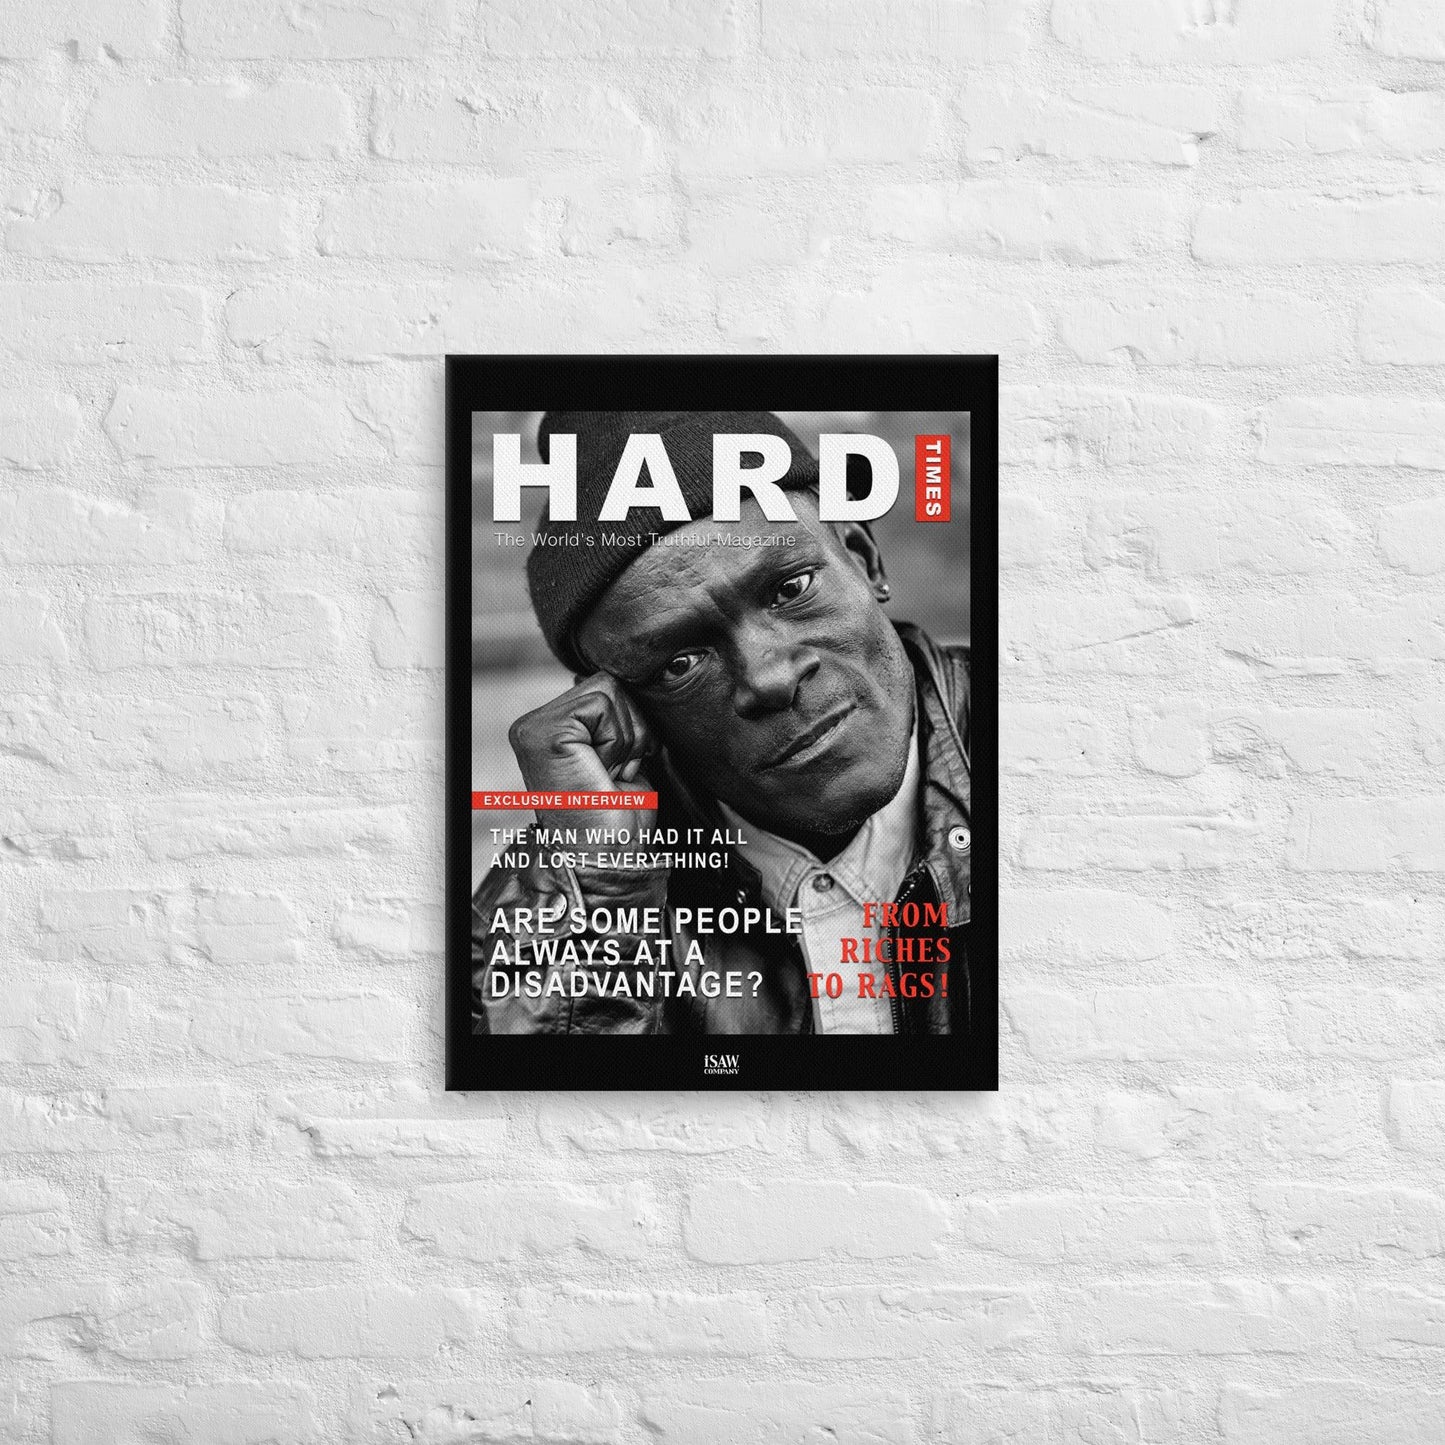 Hard Times Magazine - Canvas Print - iSAW Company